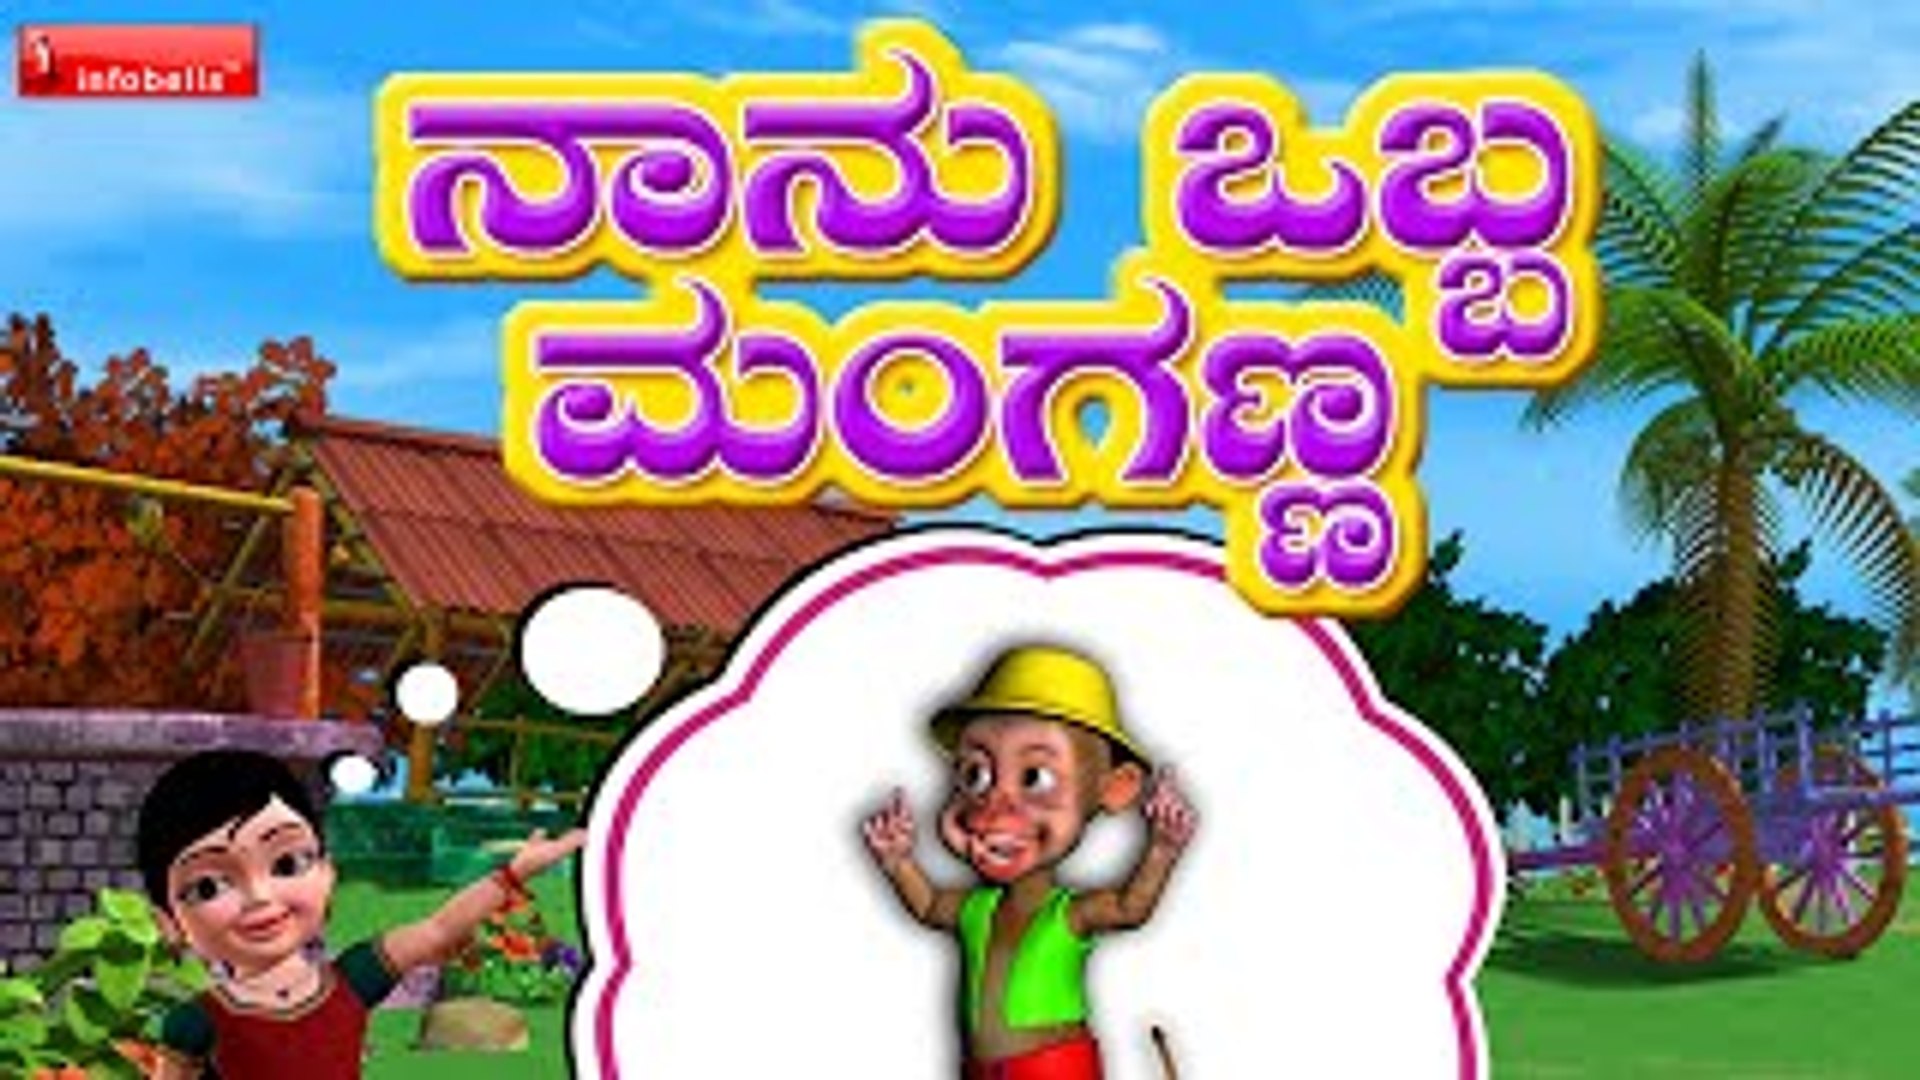 Naanu Obba Manganna   Kannada Rhymes for Children